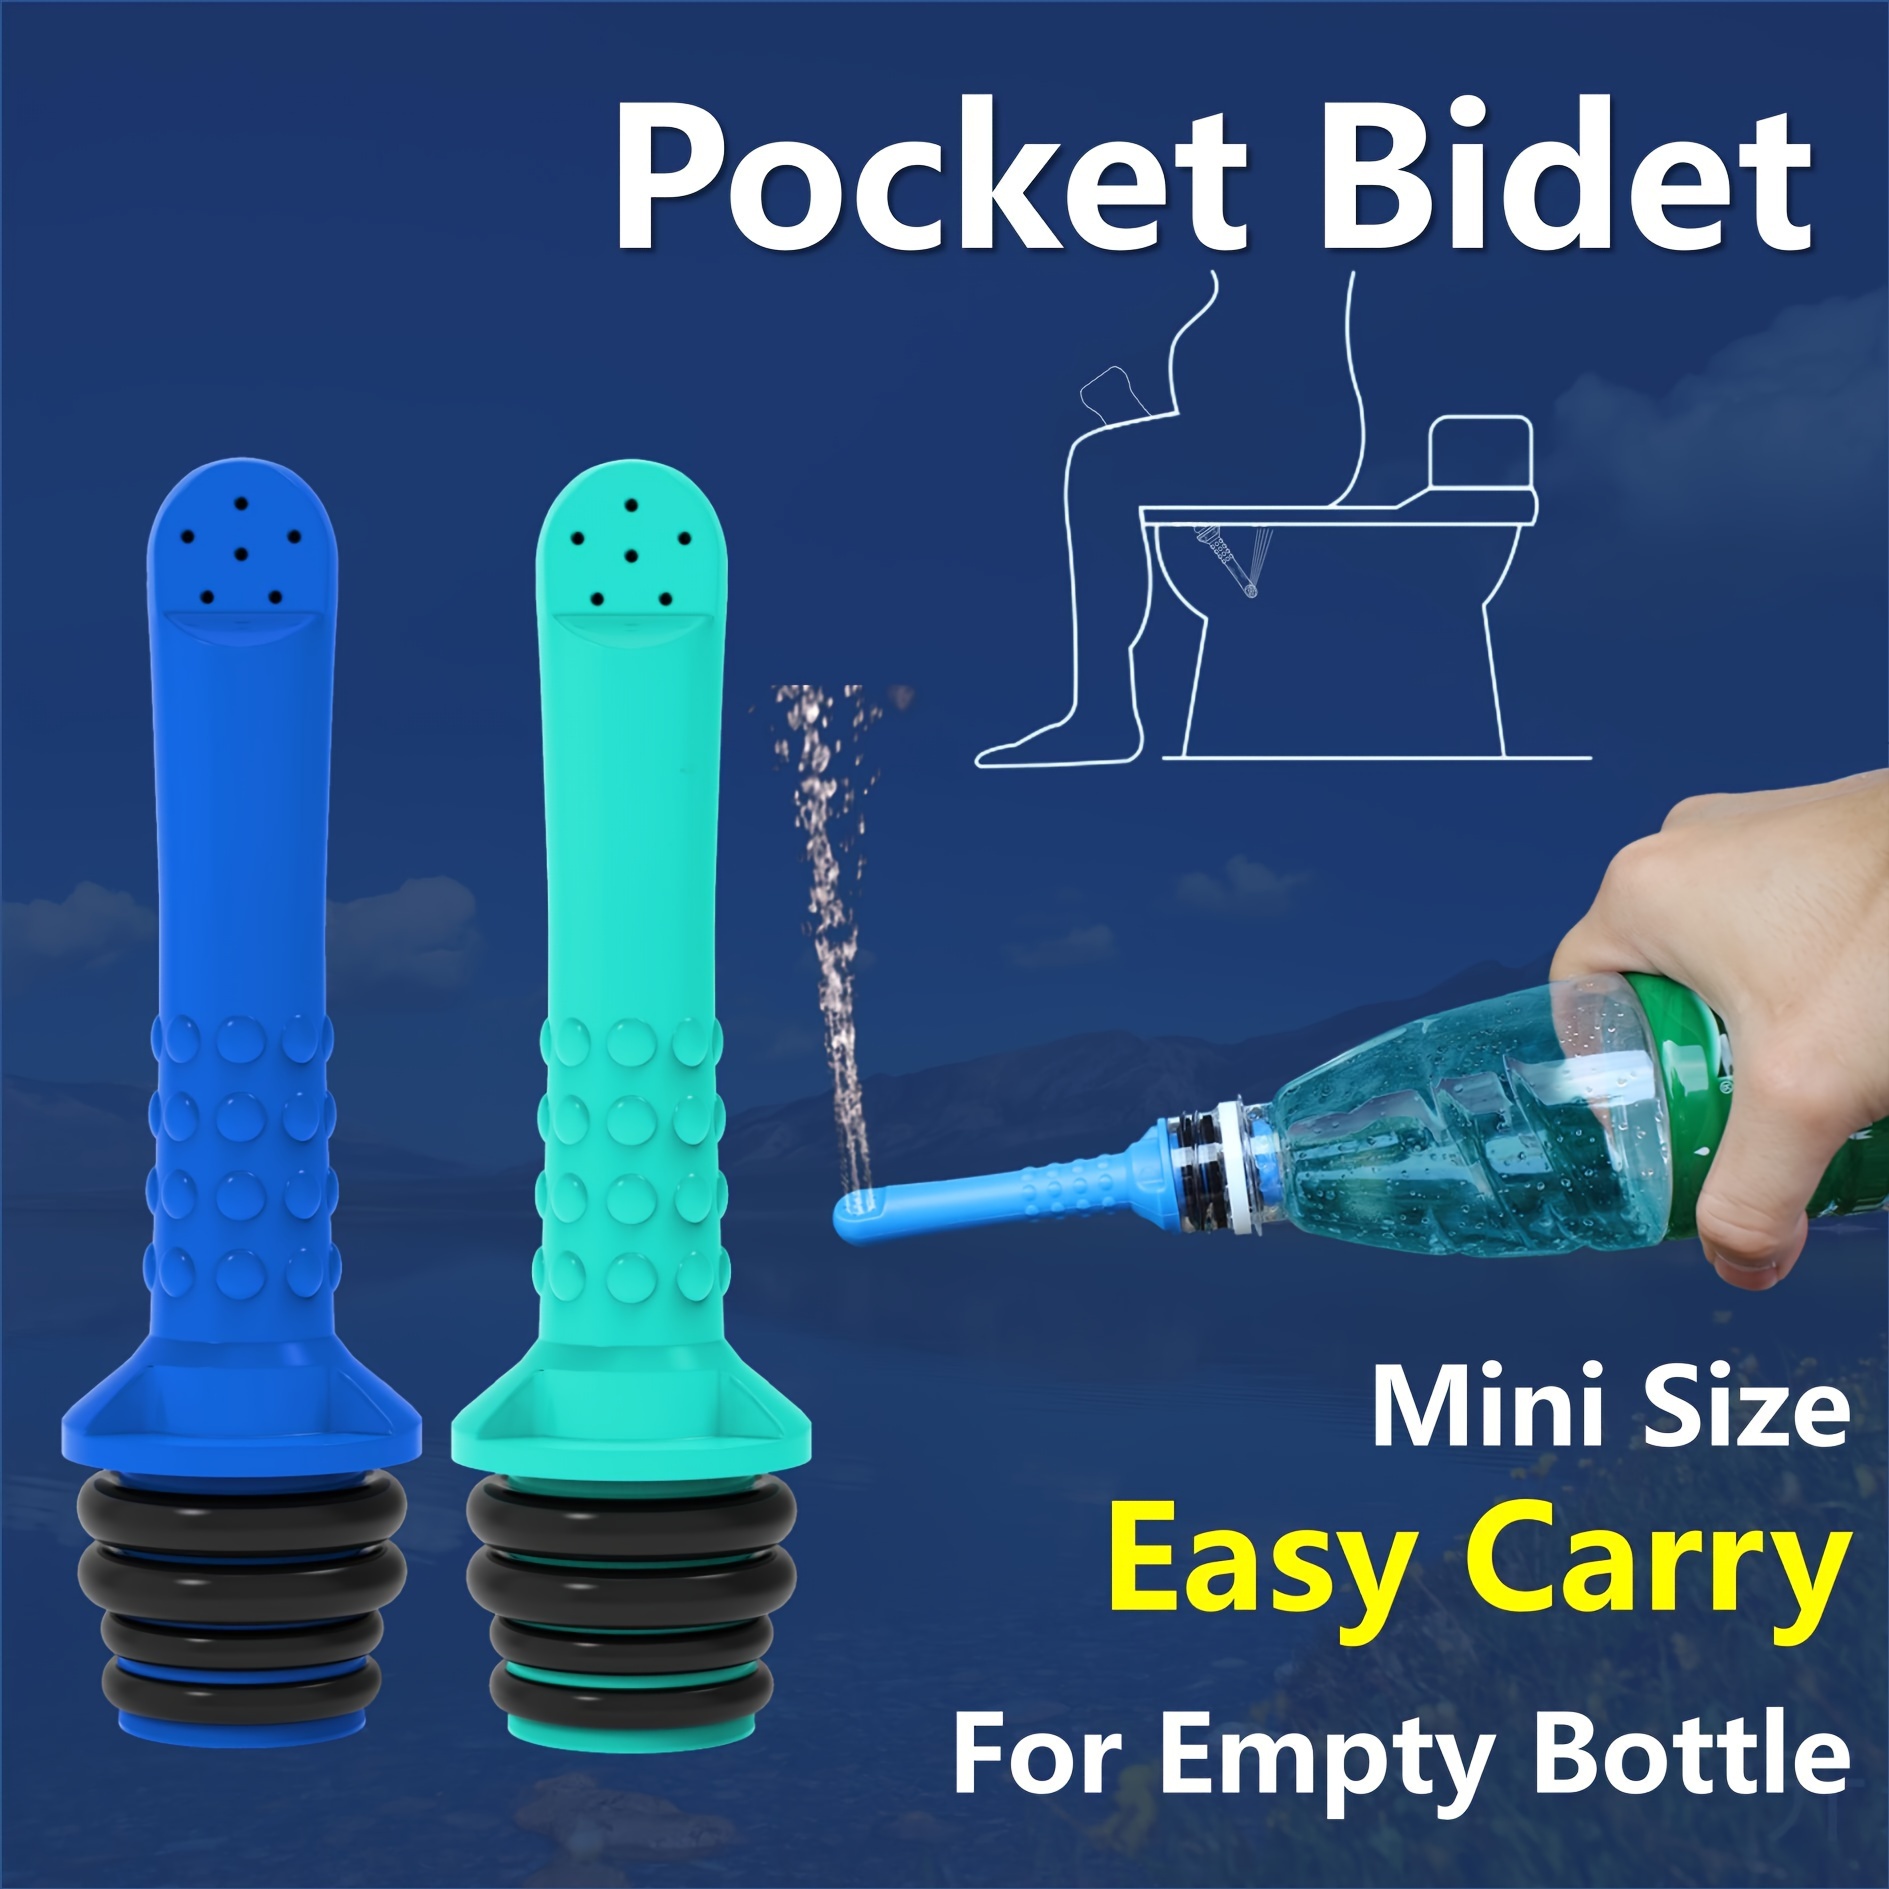 

1/2pcs Portable Bidet For Toilet Or Travel Portable Bidet Travel Bidet. Compatible With Every Bottle. Discreet, Ecological, Mini, Elderly, Sprayer, Bio, Personal, Handheld